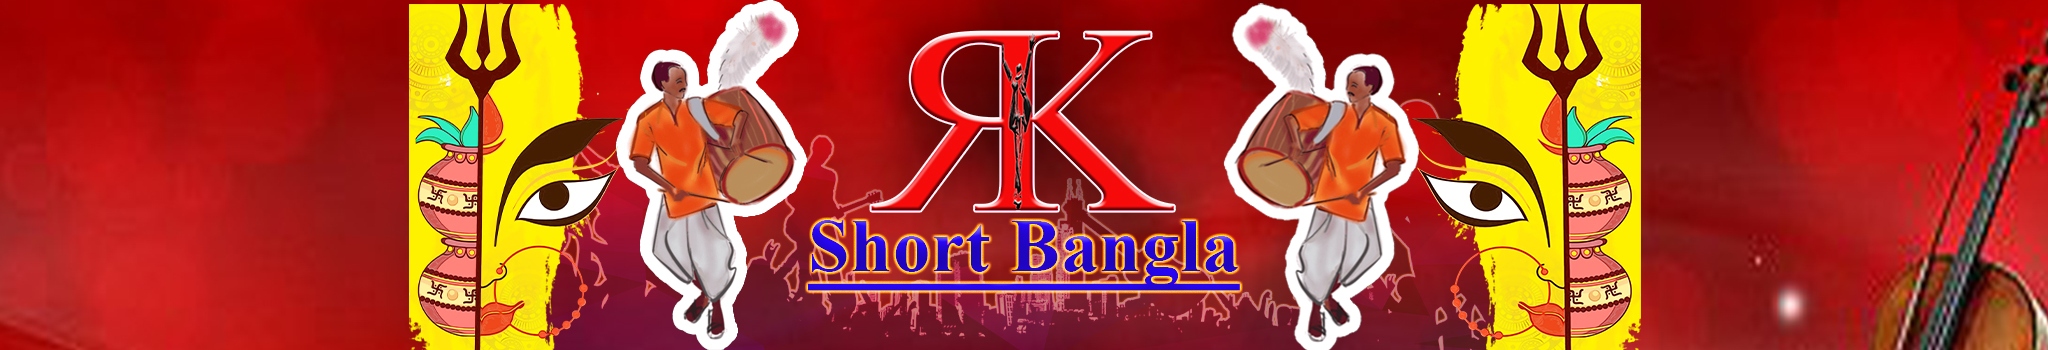 RK Short Bangla